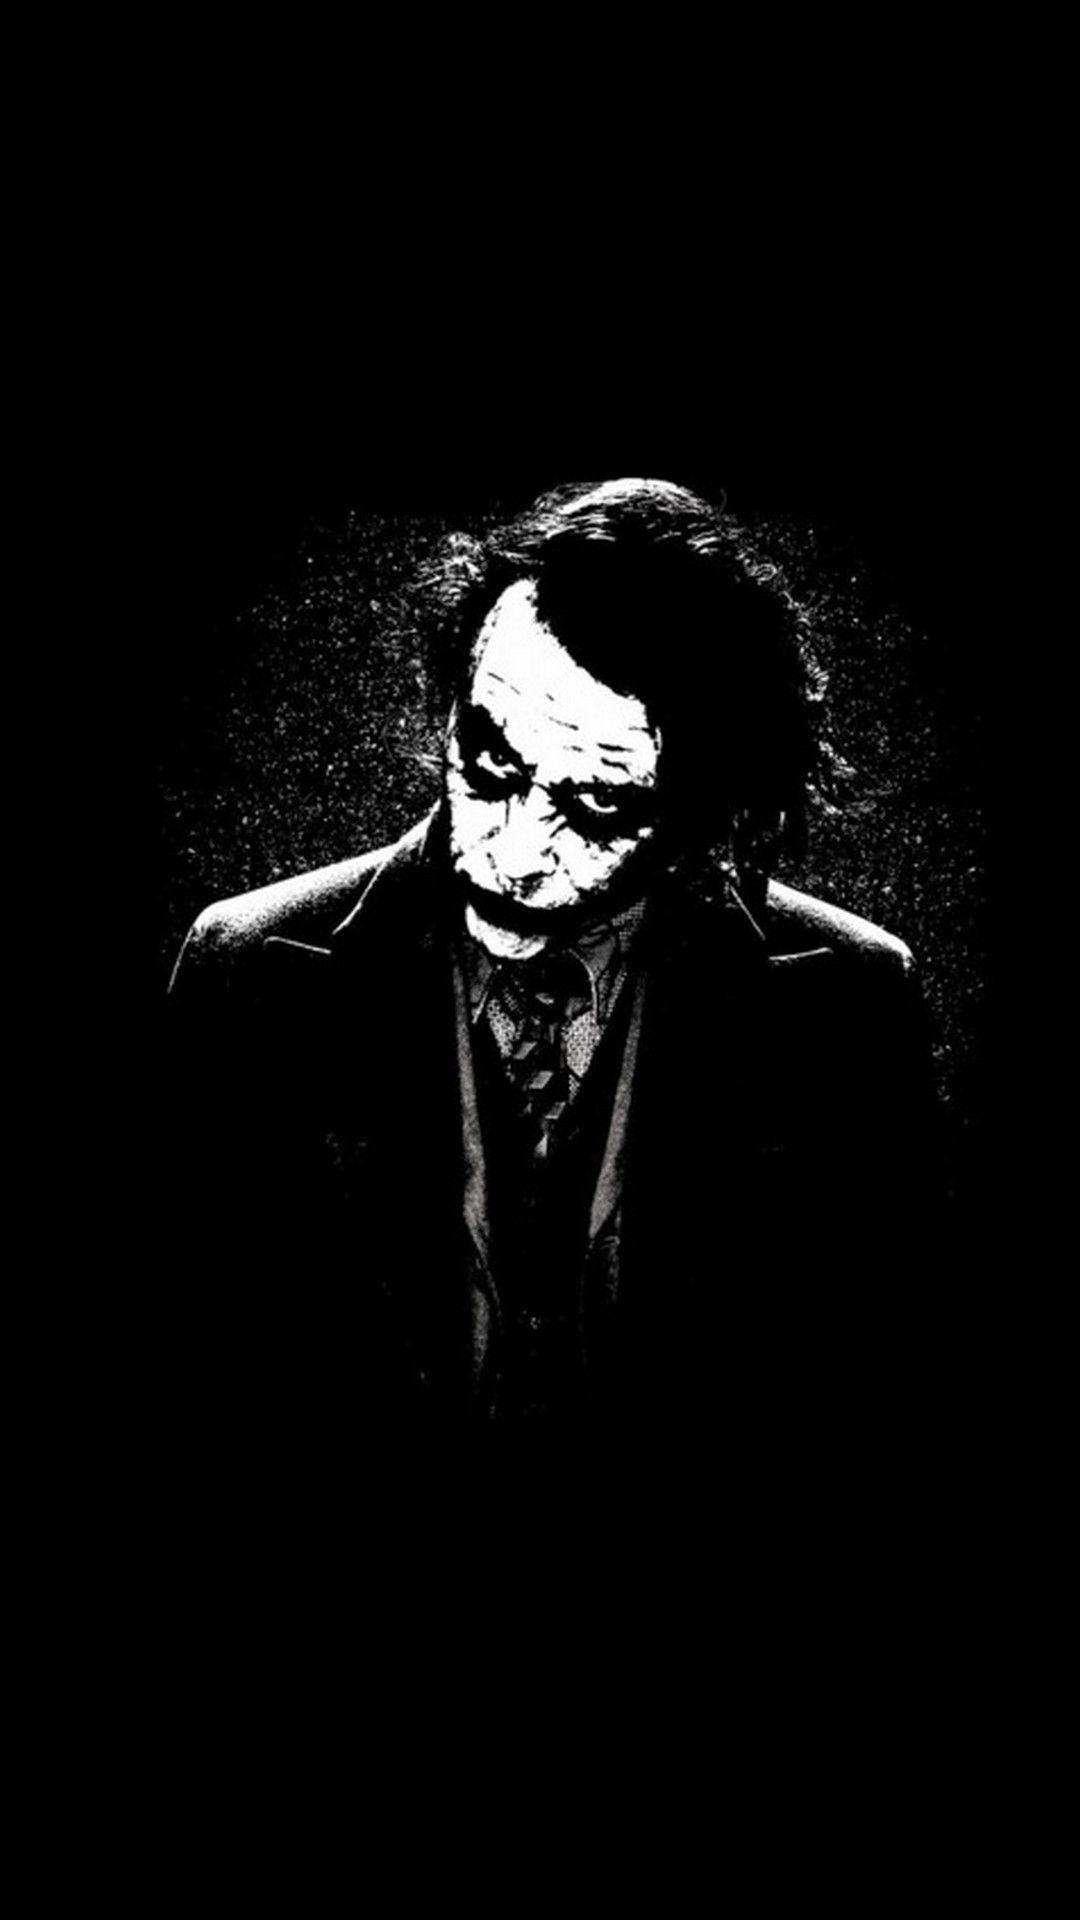 Black Joker iPhone Wallpaper. Joker iphone wallpaper, Joker